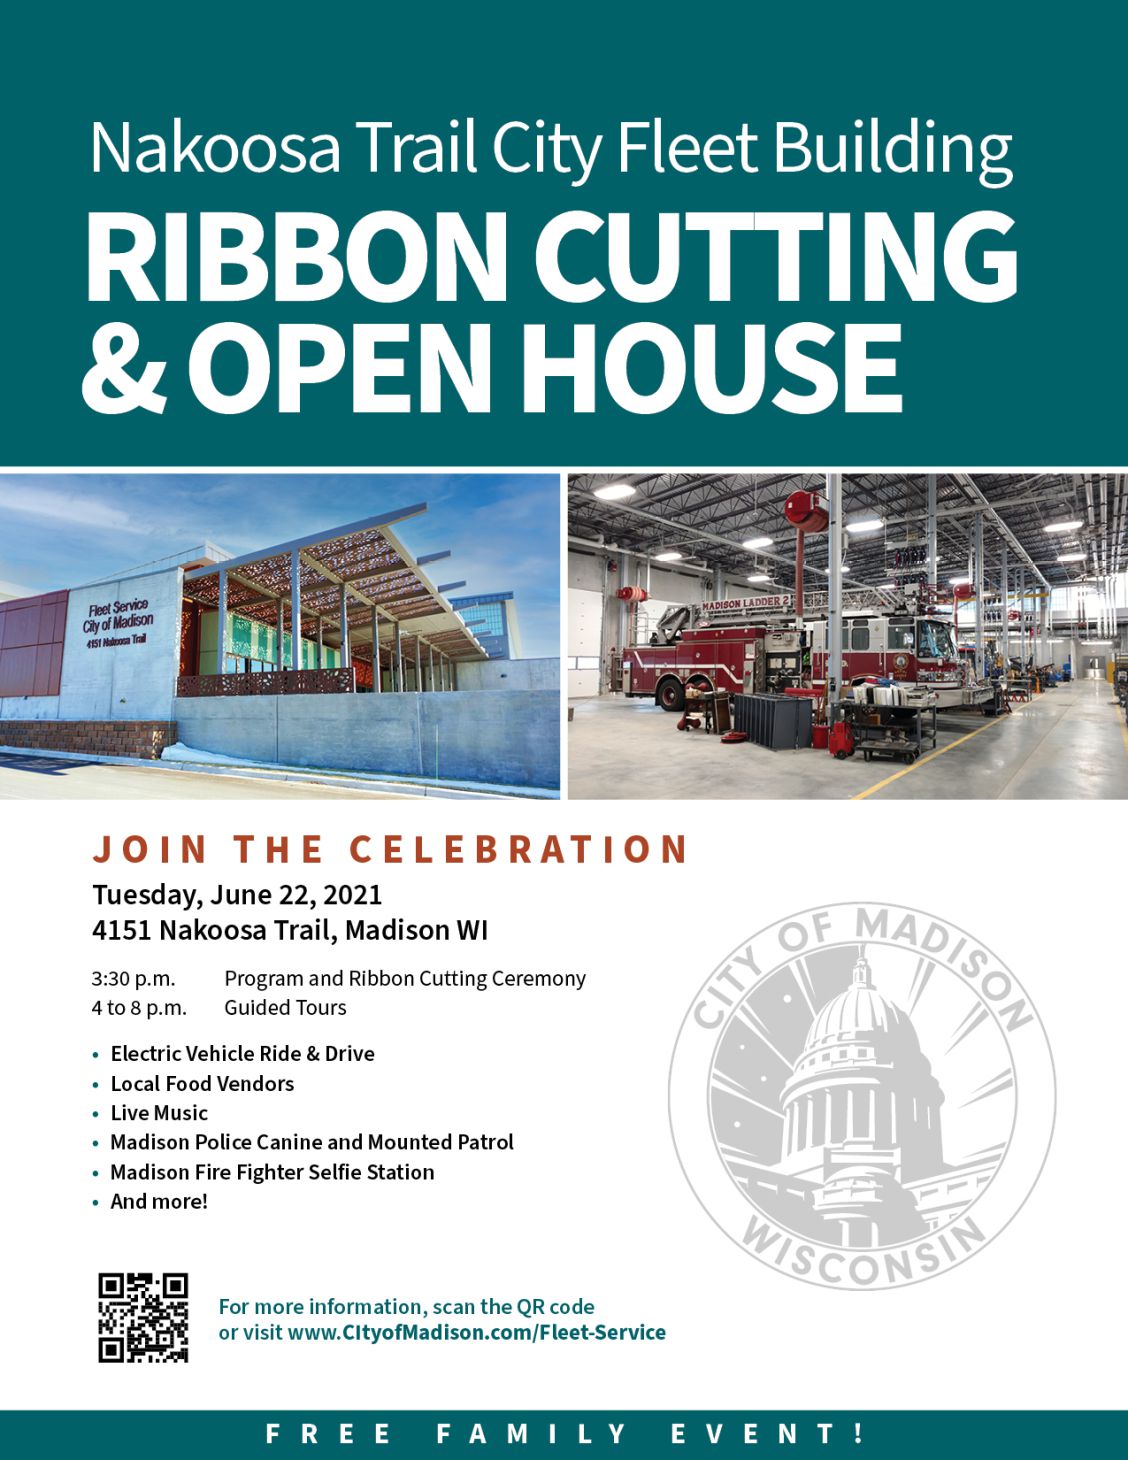 Nakoosa Trail City Fleet Building: Ribbon Cutting & Open House Invitation